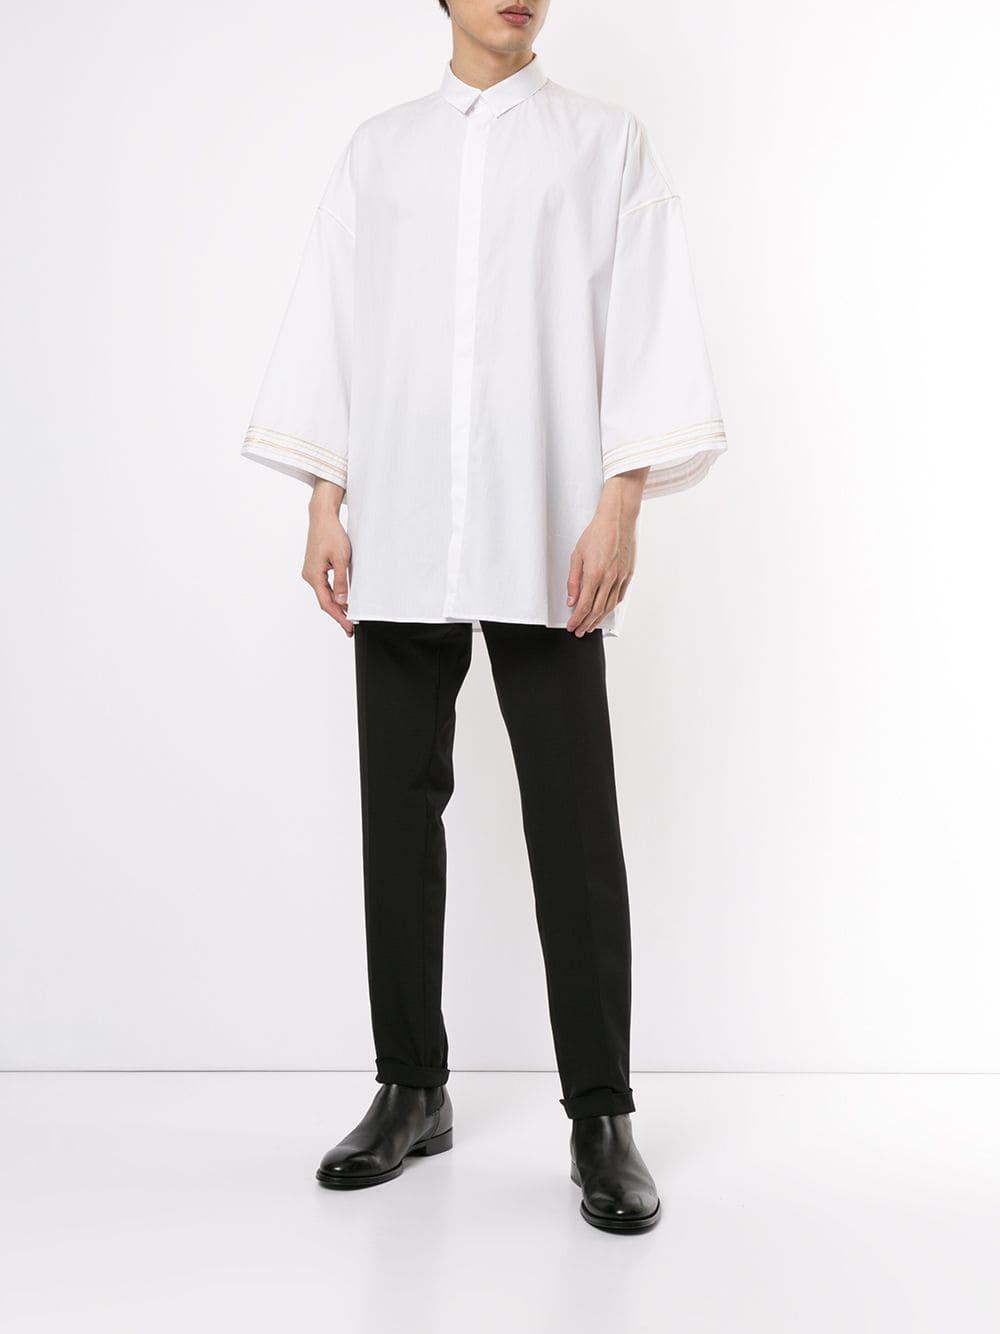 Haider Ackermann Cotton Wide Sleeve Shirt in White for Men - Lyst